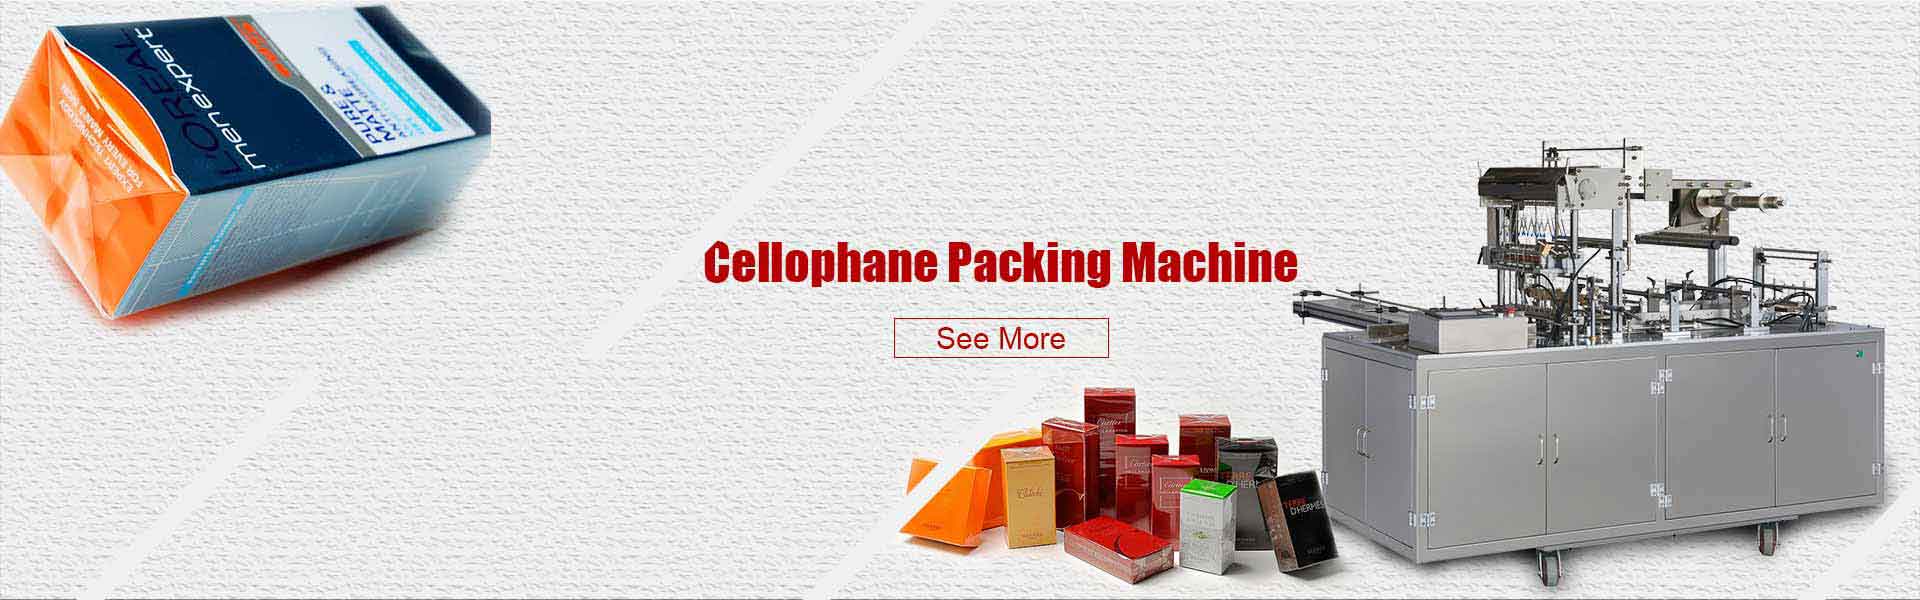 Cellophane Packing Machine